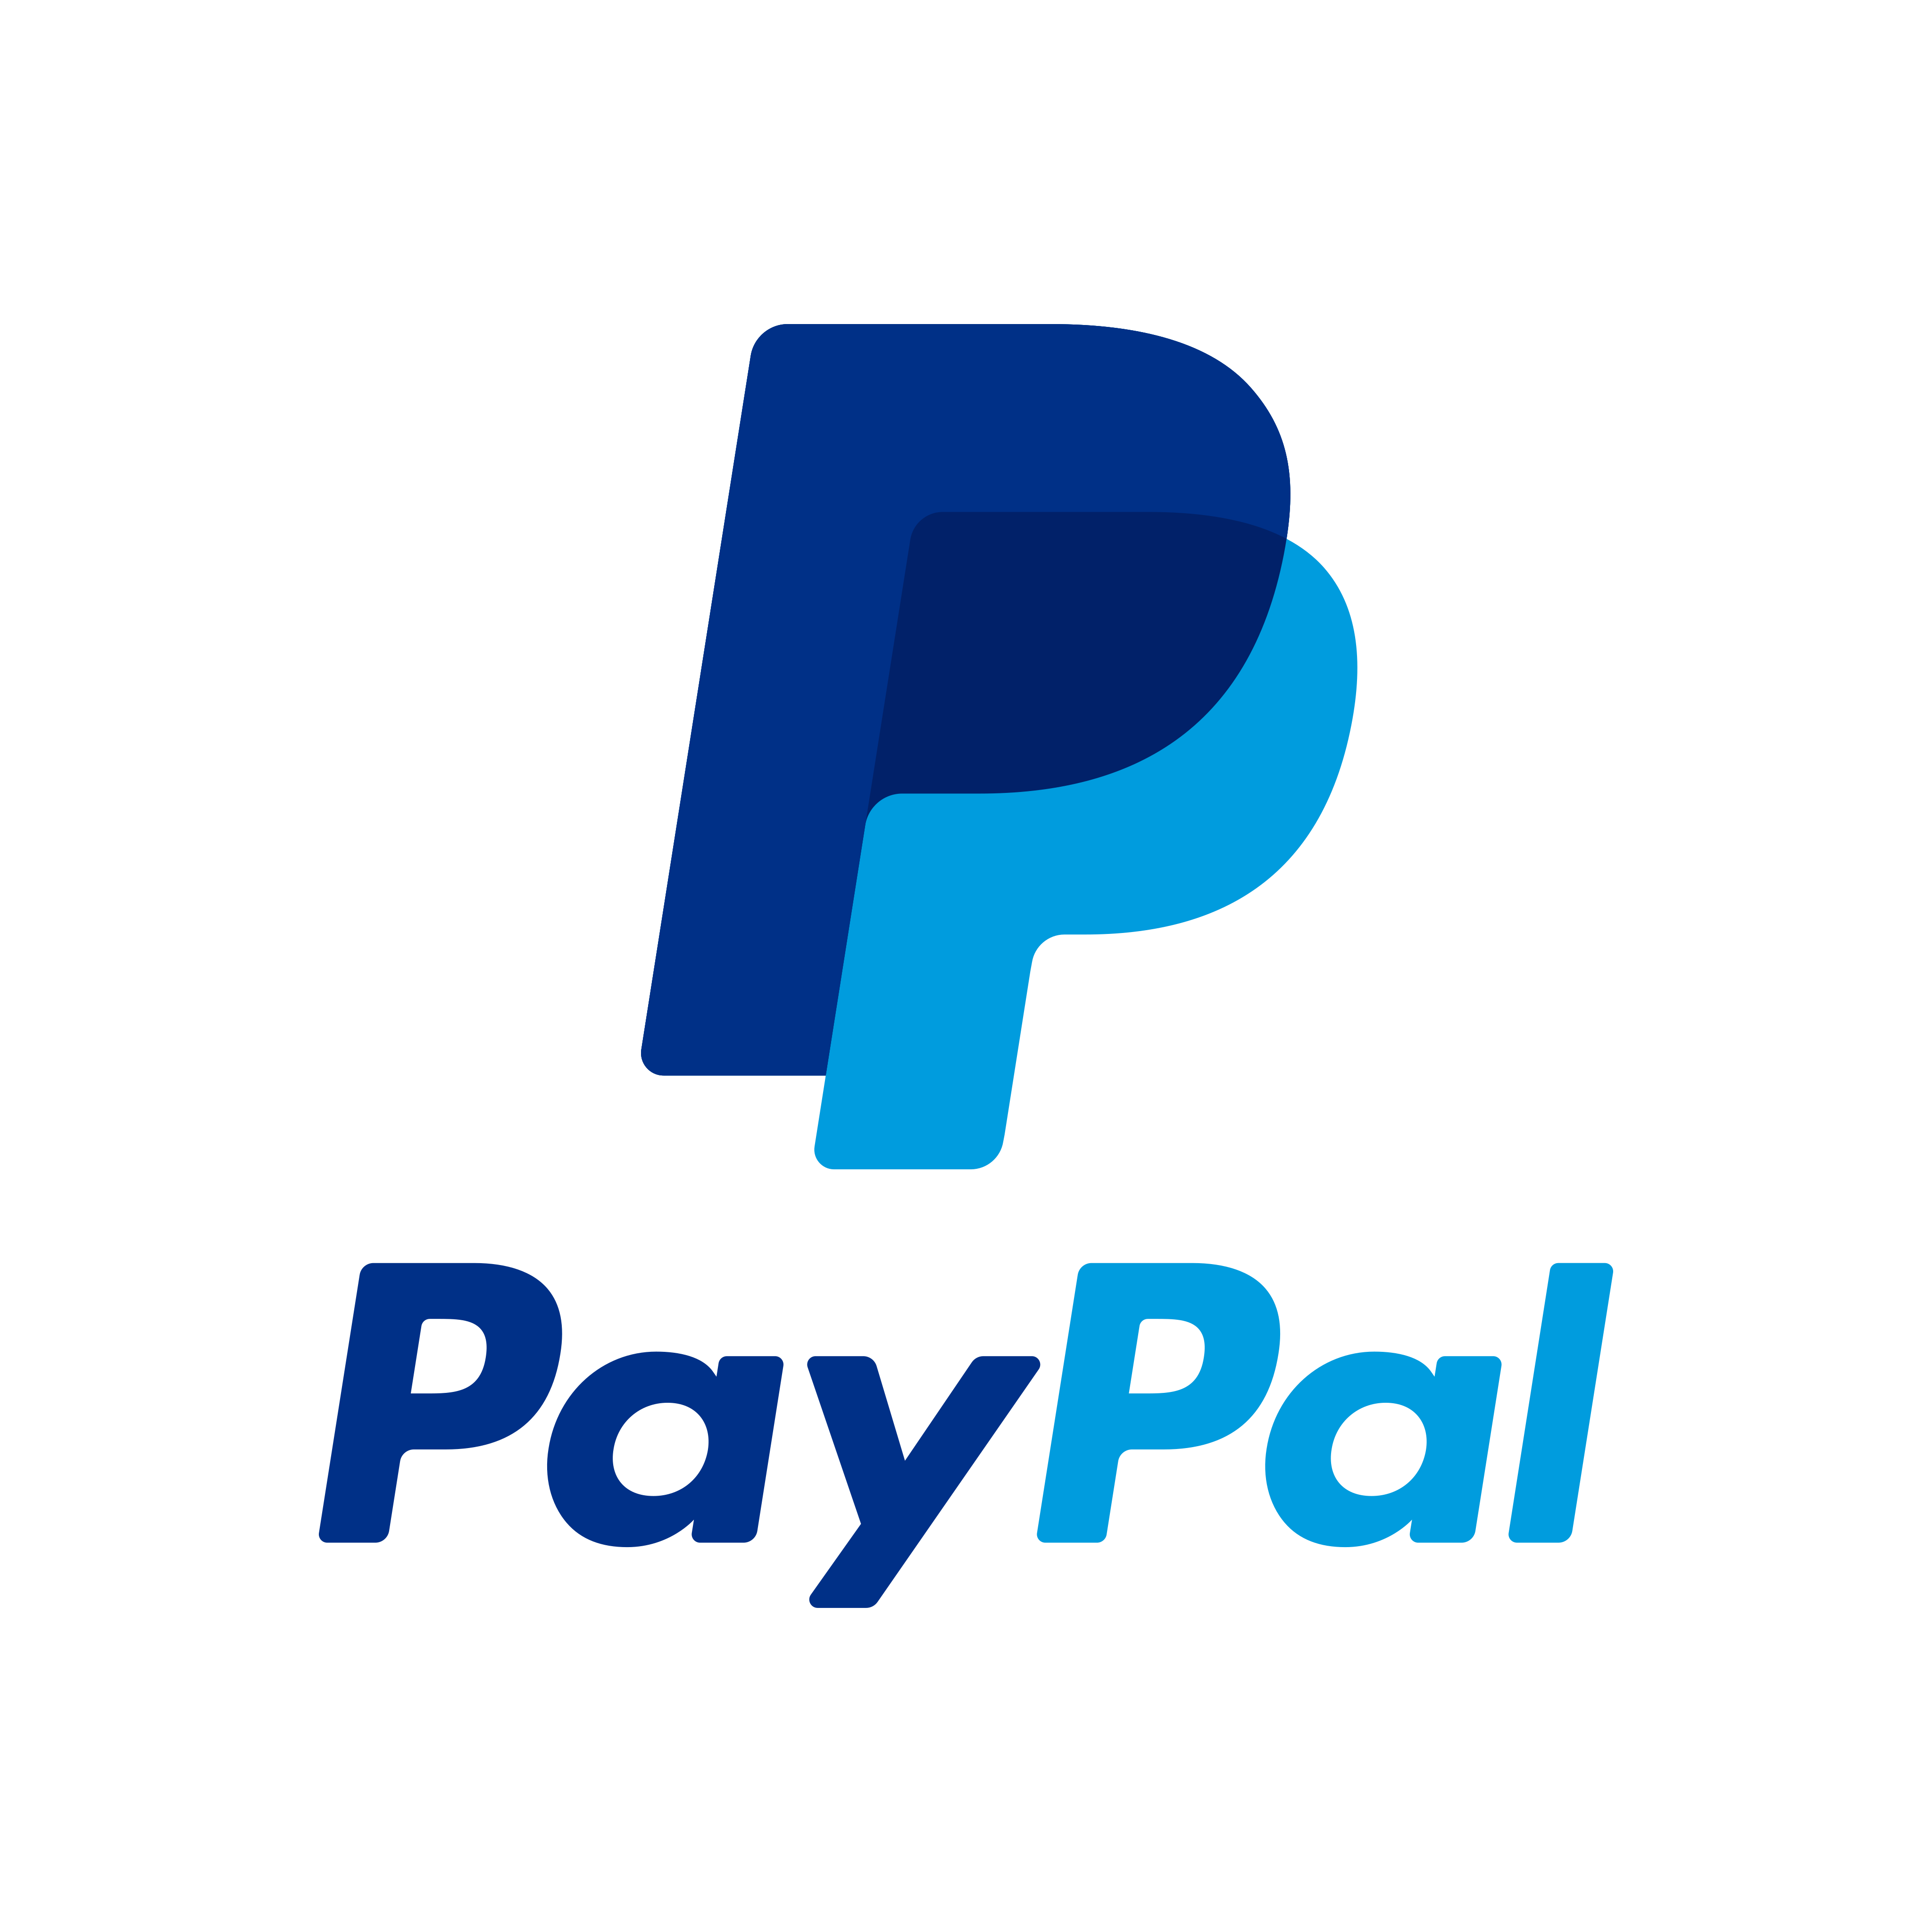 paypal logo 0 - Paypal Logo